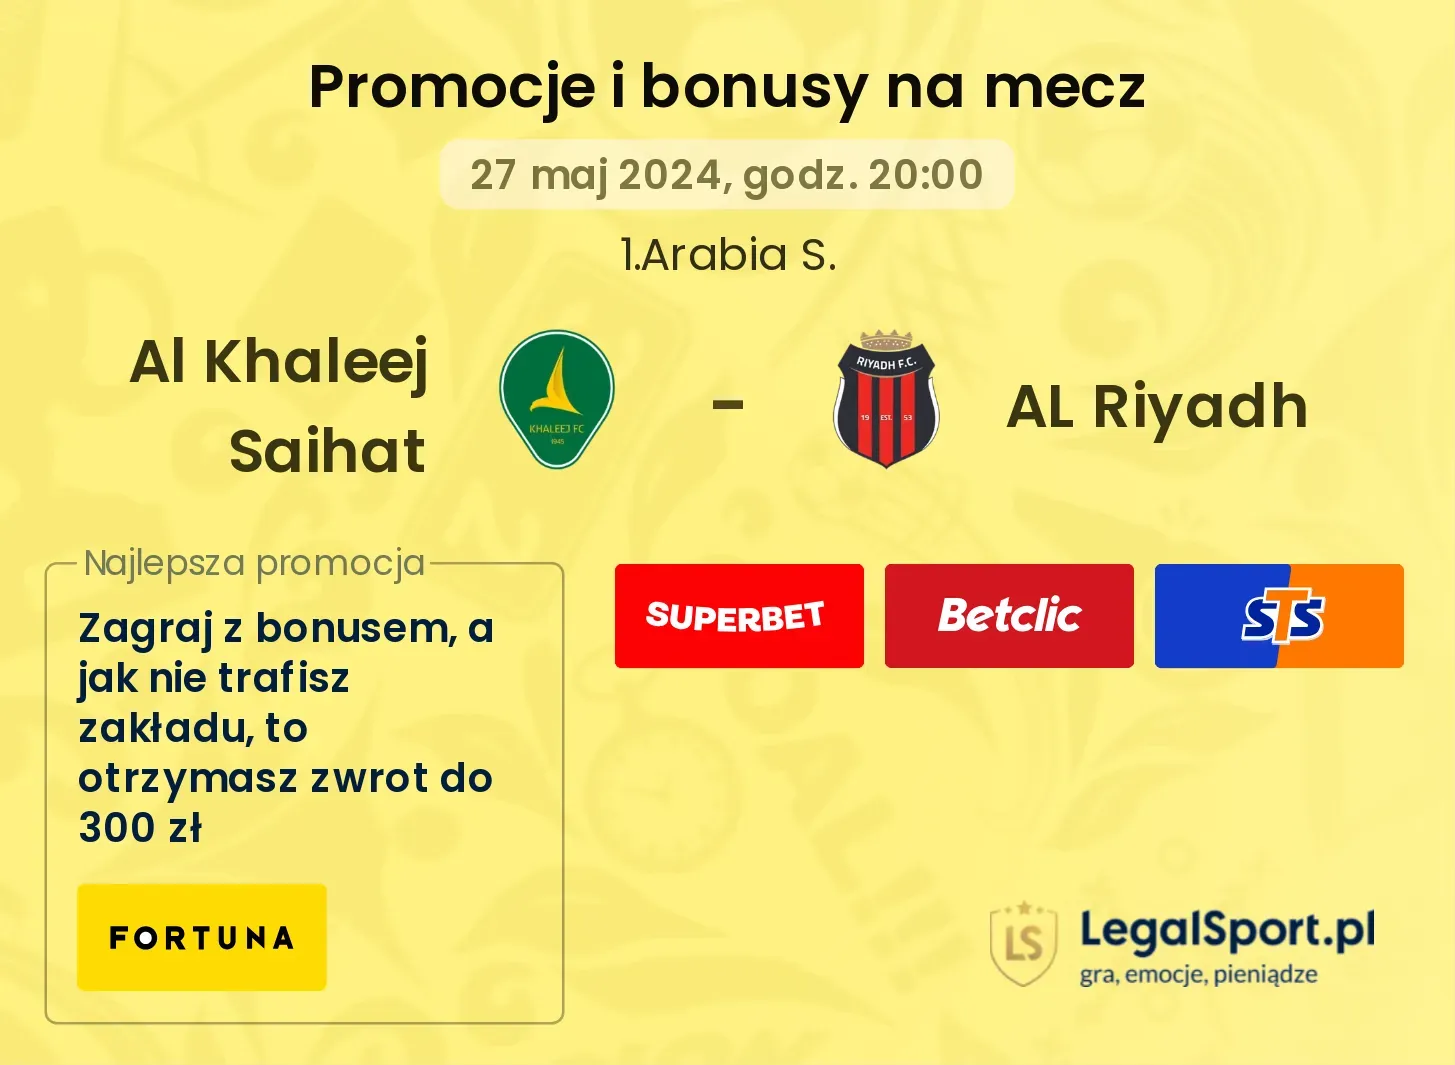 Al Khaleej Saihat - AL Riyadh promocje bonusy na mecz